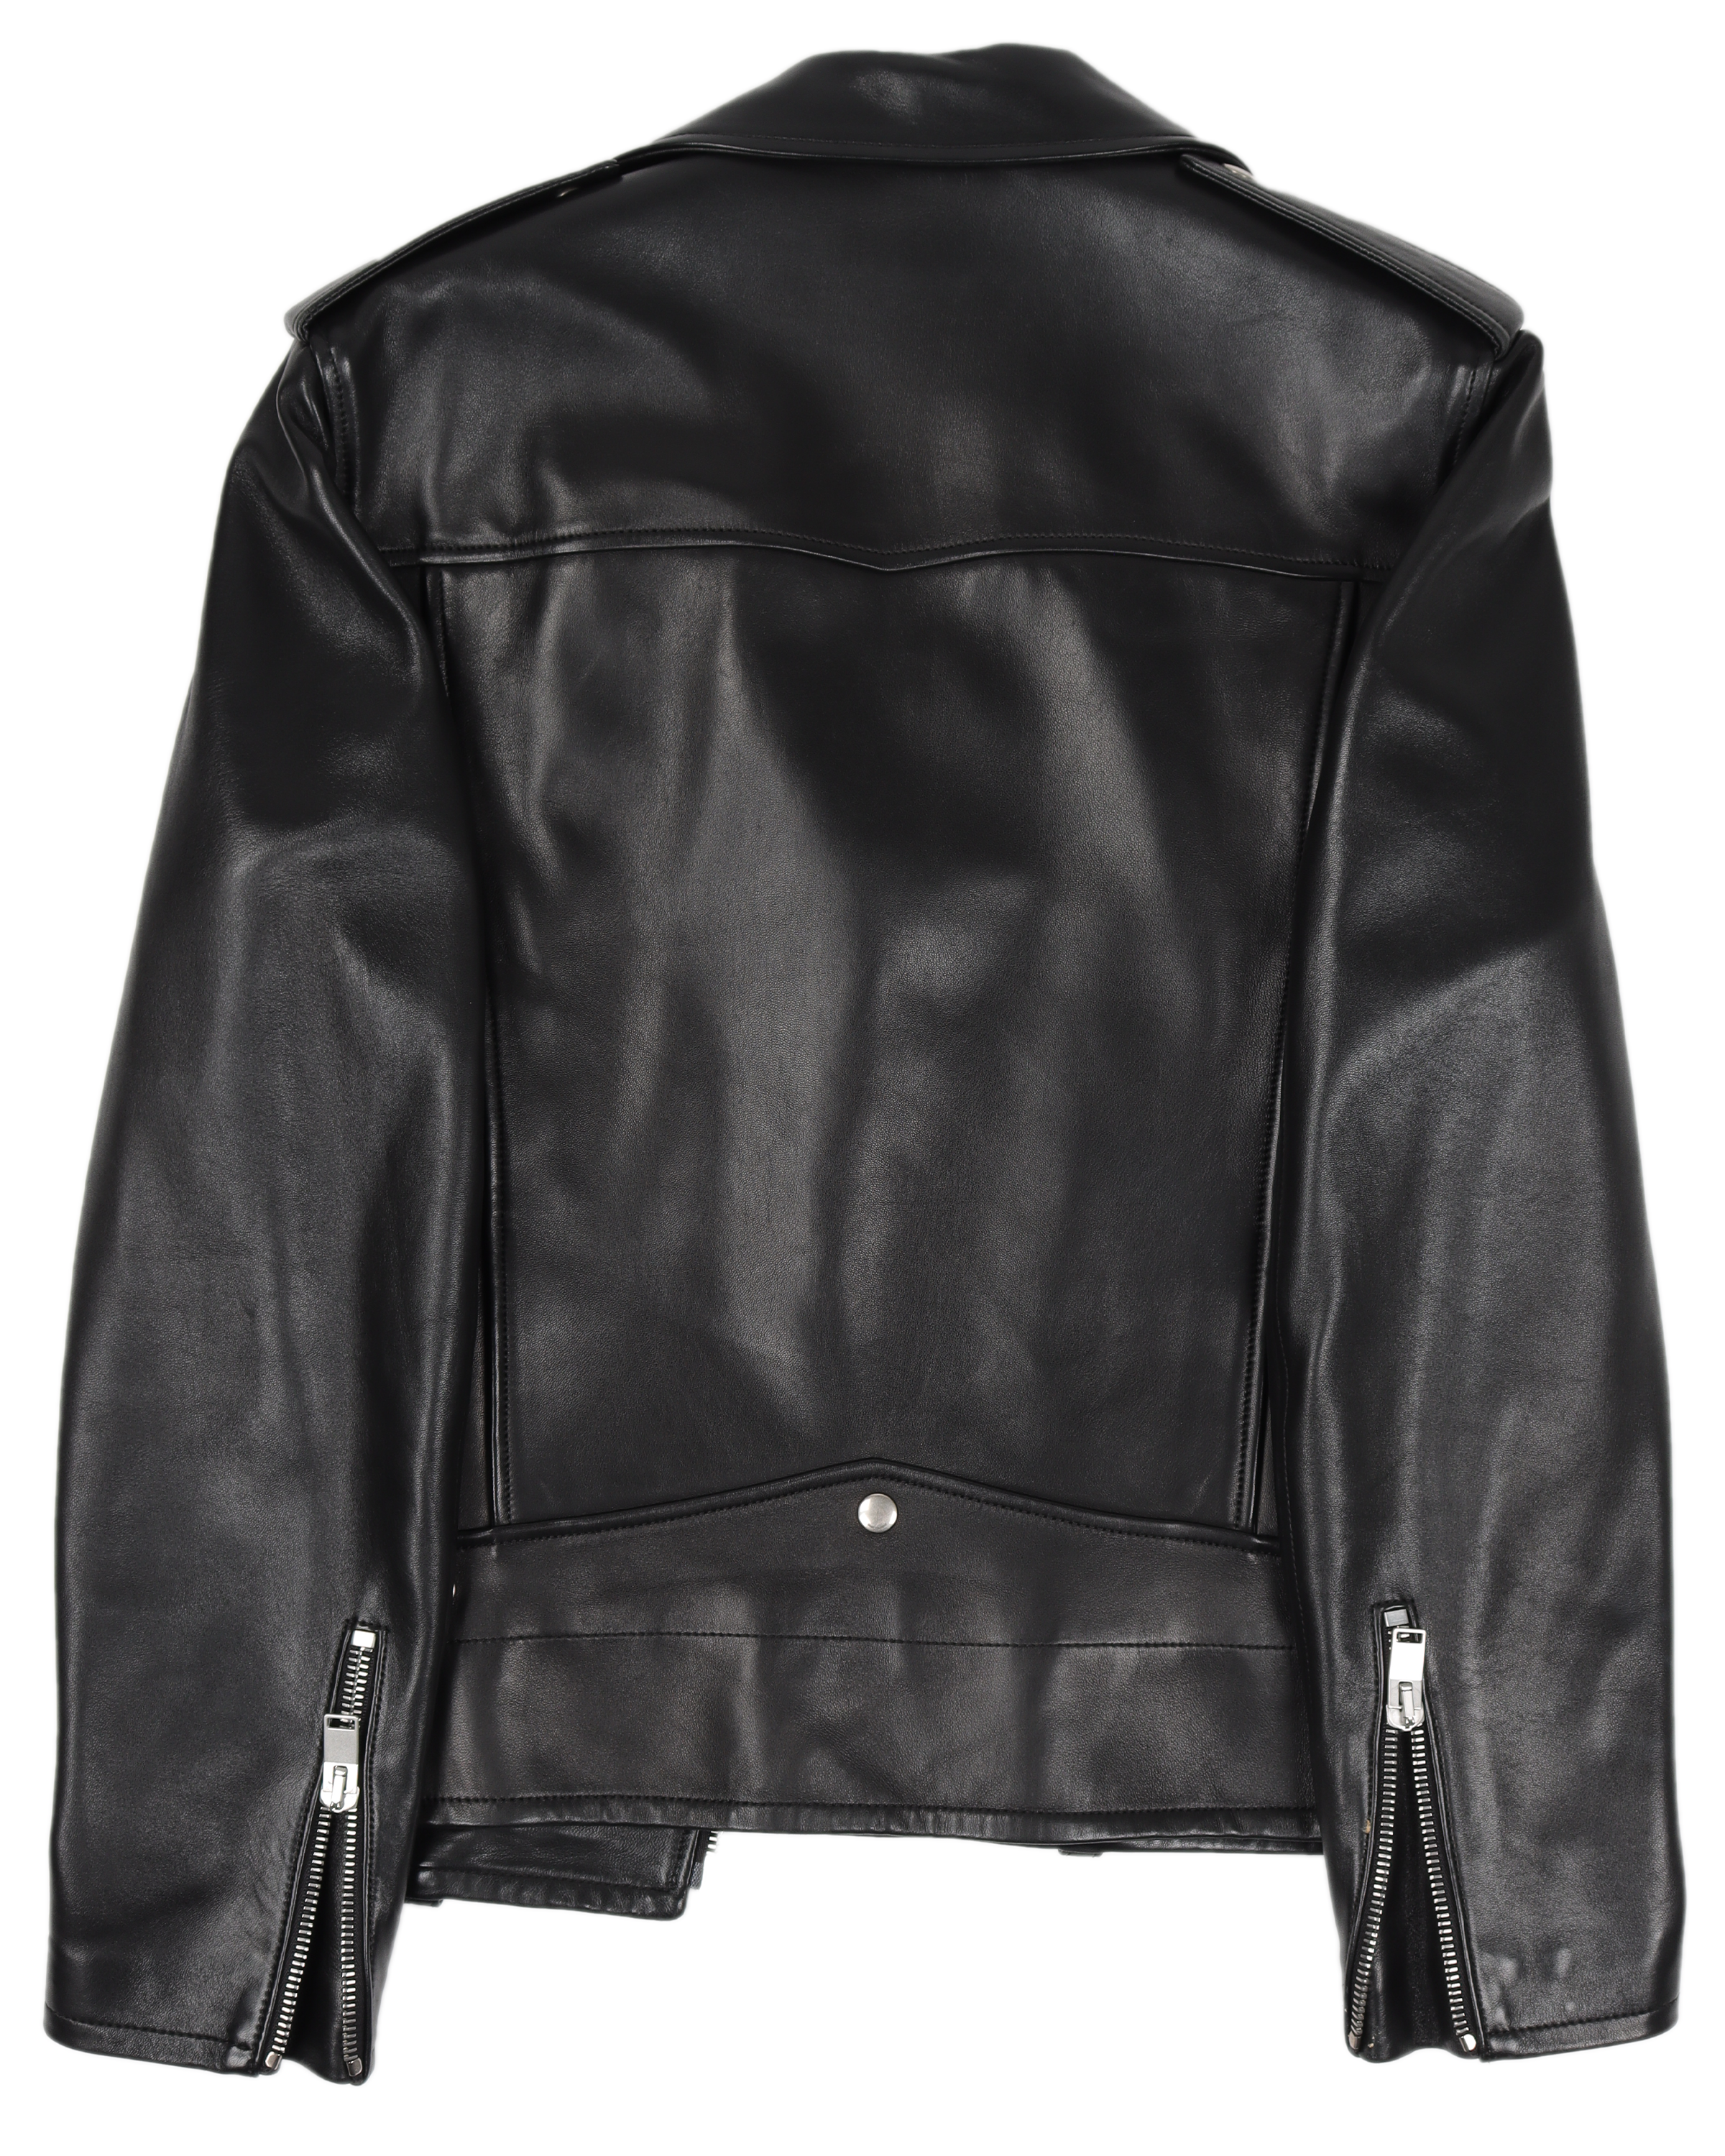 FW13 L01 Lambskin Leather Motorcycle Jacket